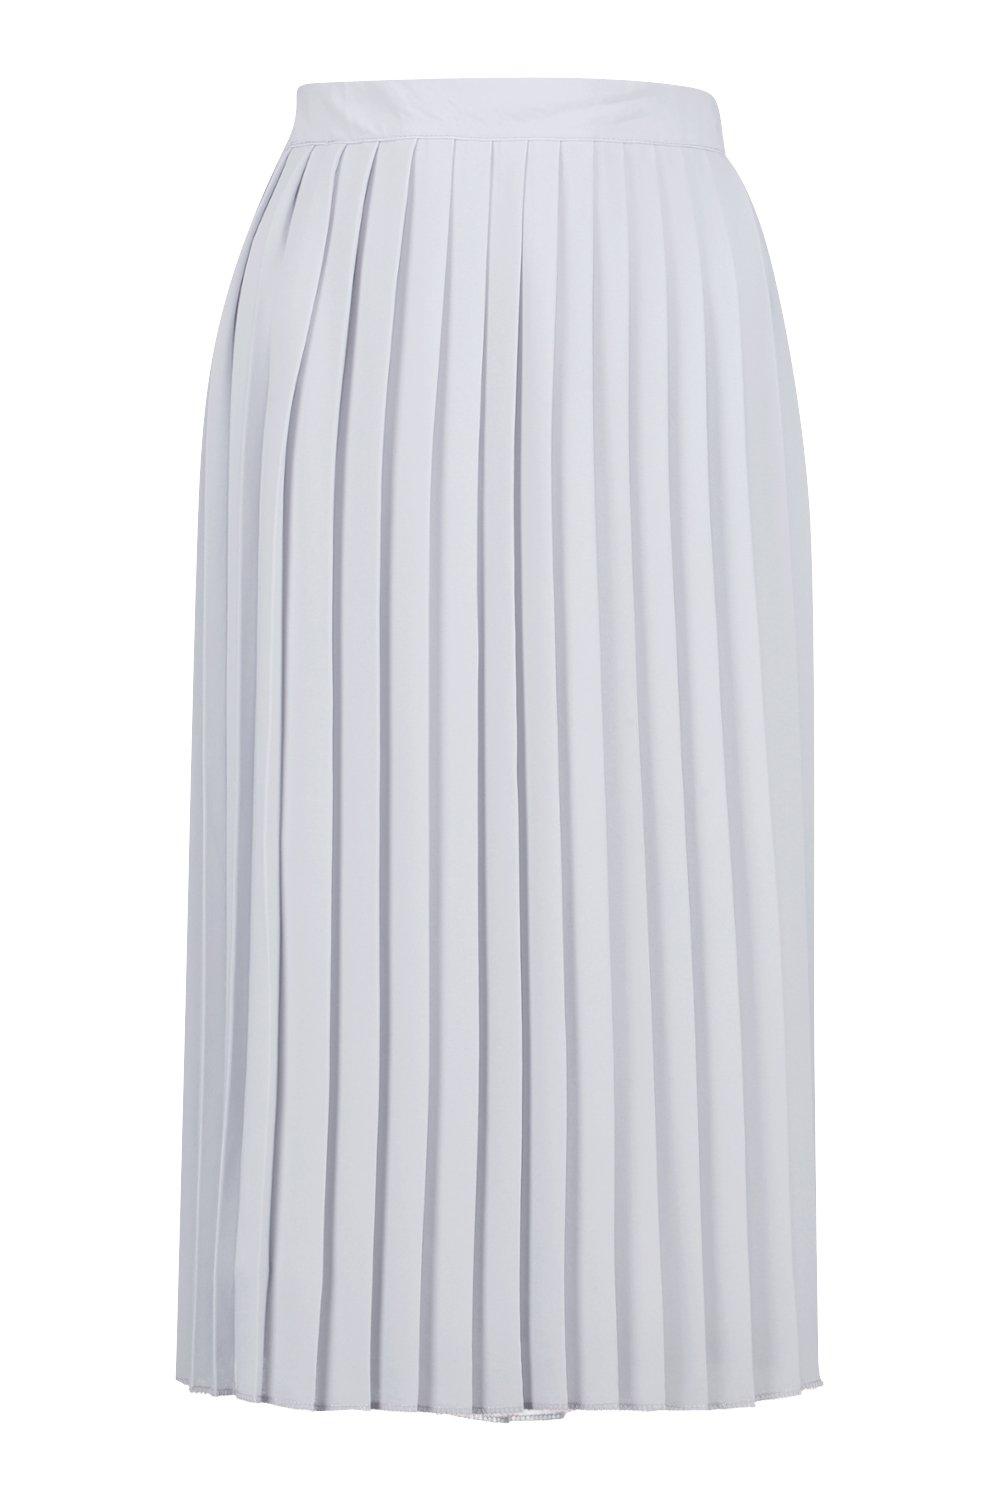 Boohoo Aura Chiffon Pleated Midi Skirt | eBay